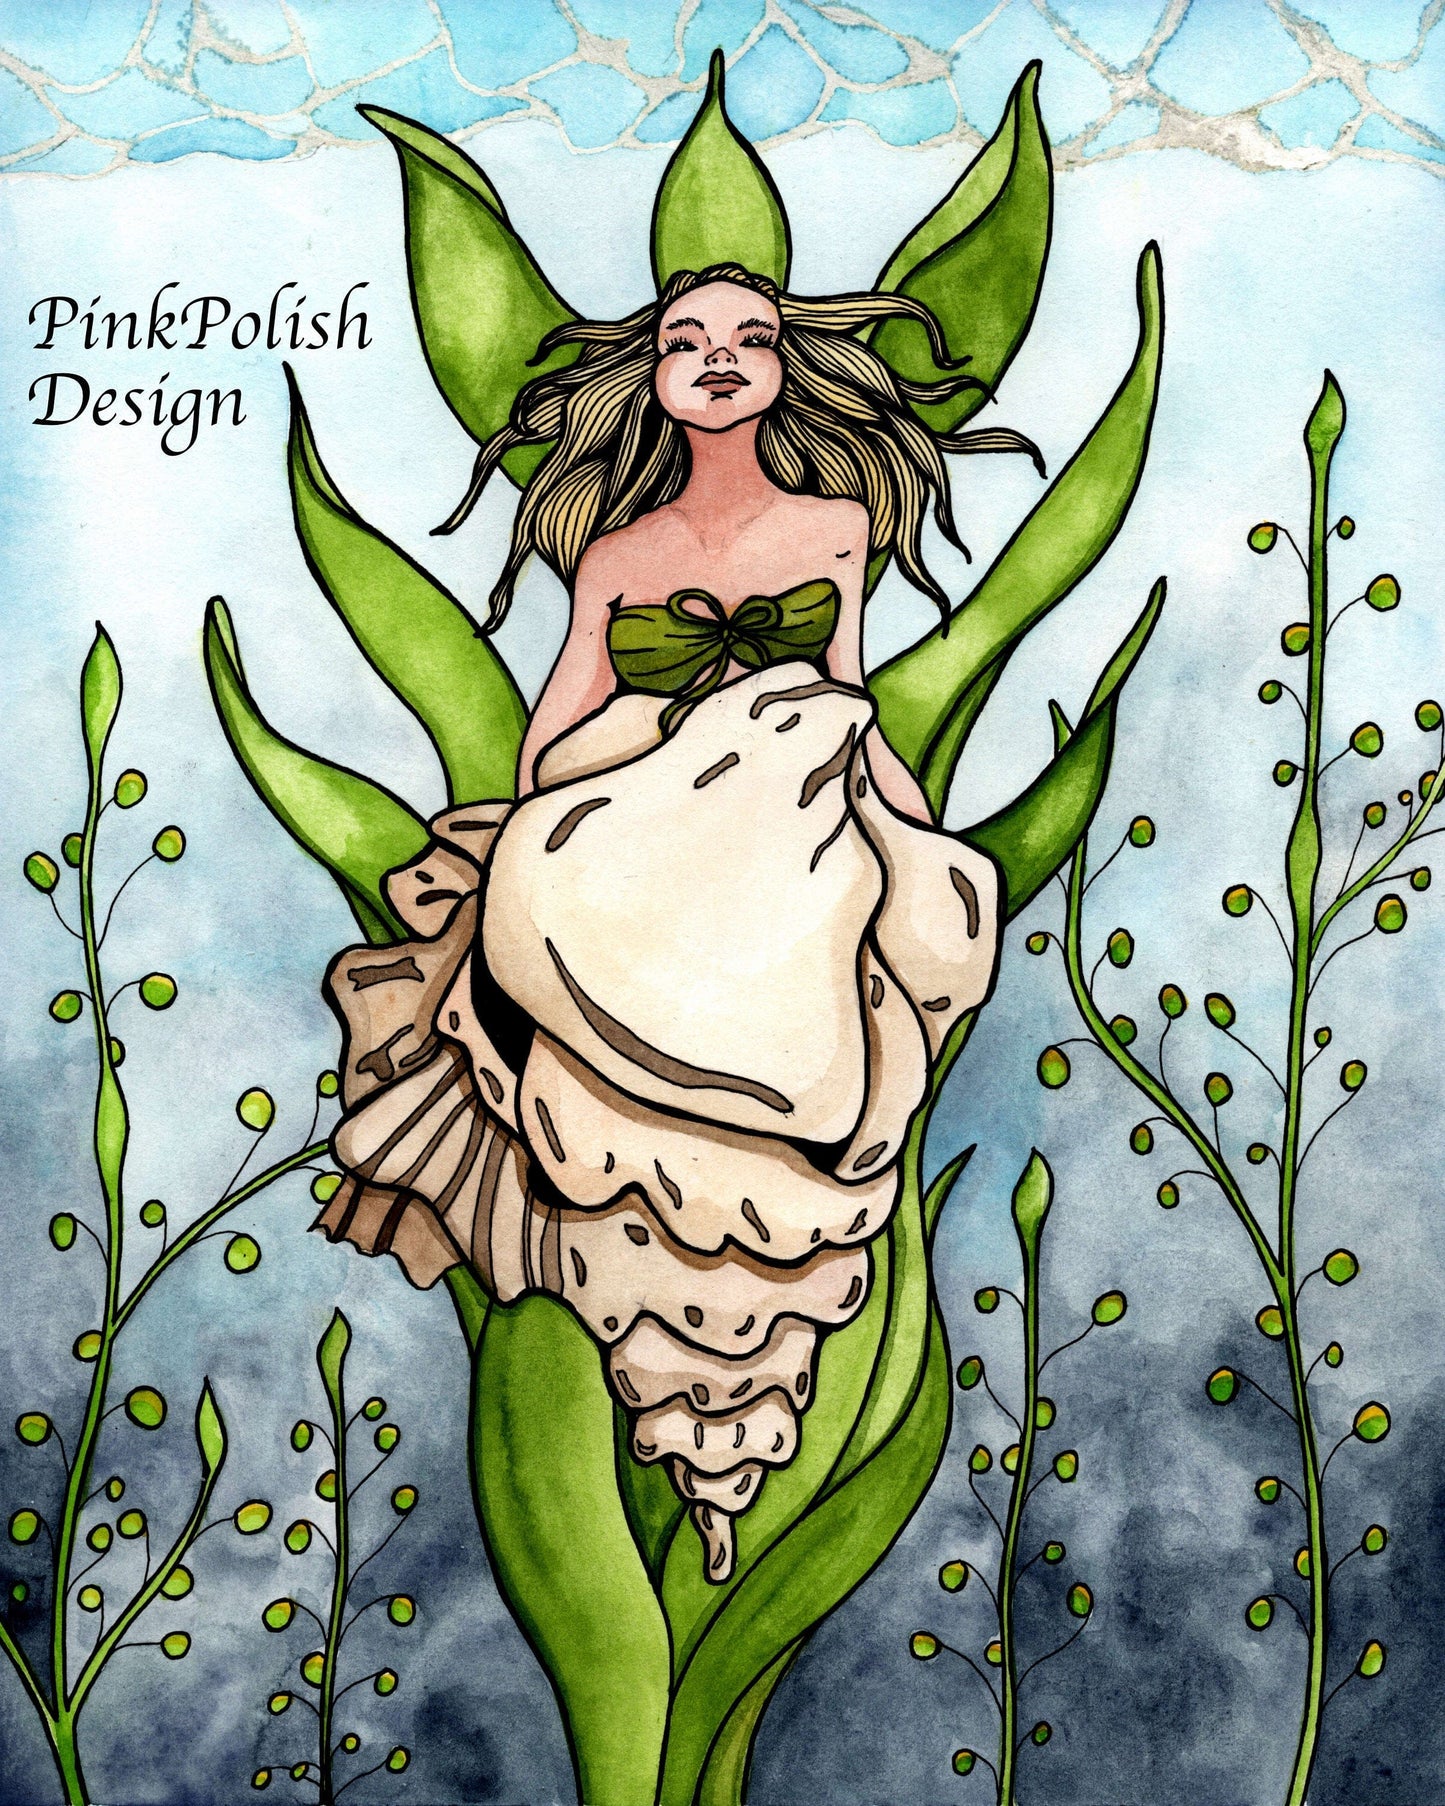 PinkPolish Design Art Prints "Shell Siren"  Watercolor Painting: Art Print